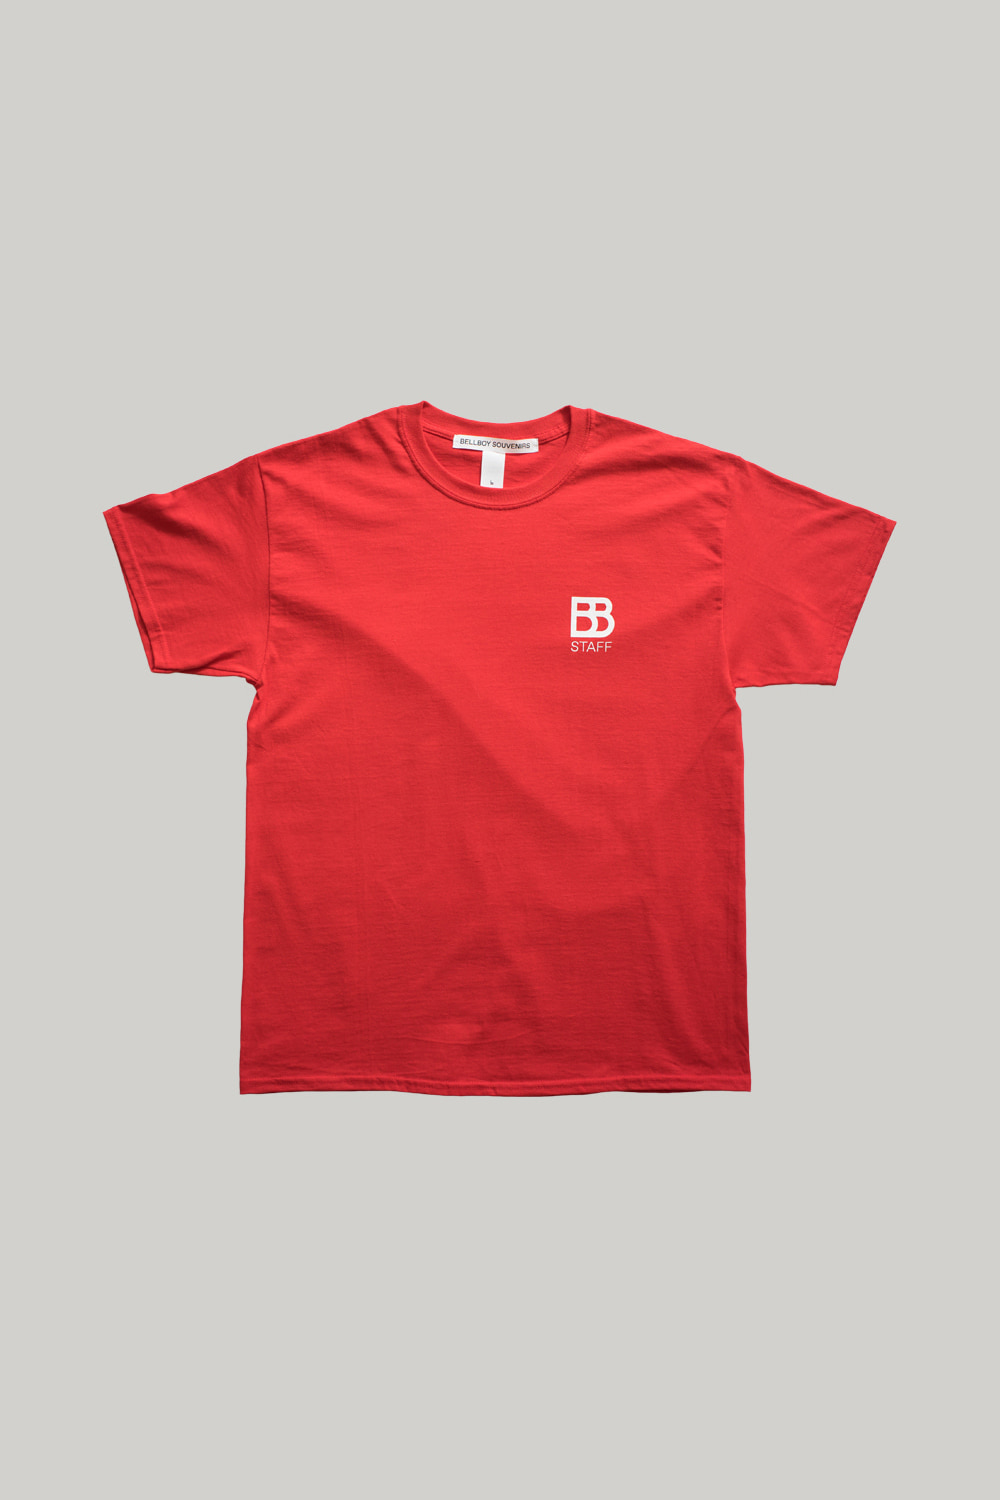 BELLBOY Staff T-Shirts - Red 티셔츠, 워시드 헤비웨이트 티셔츠, 옥스포드셔츠, 버튼다운셔츠, 메신저백, 캔버스백